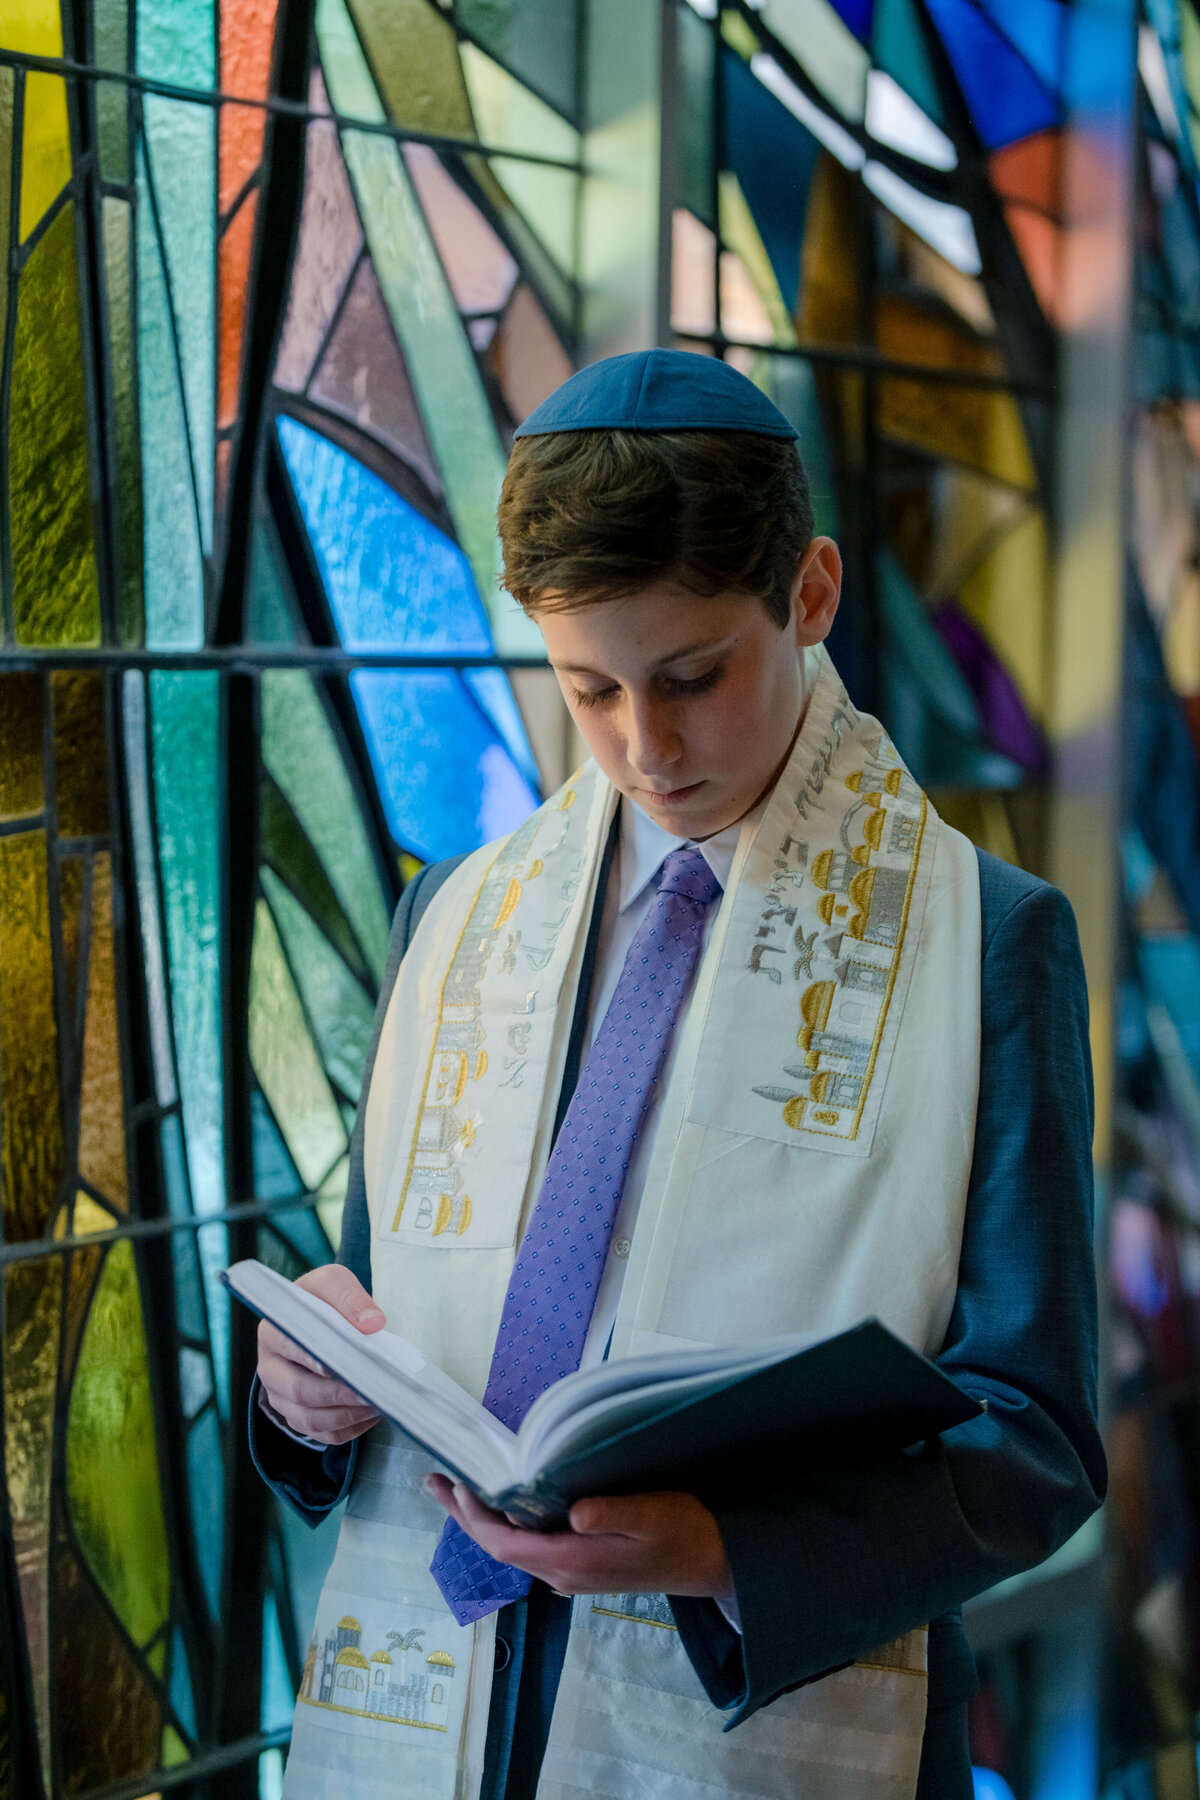 Bar Mitzvah ceremony at a Los Angeles synagogue